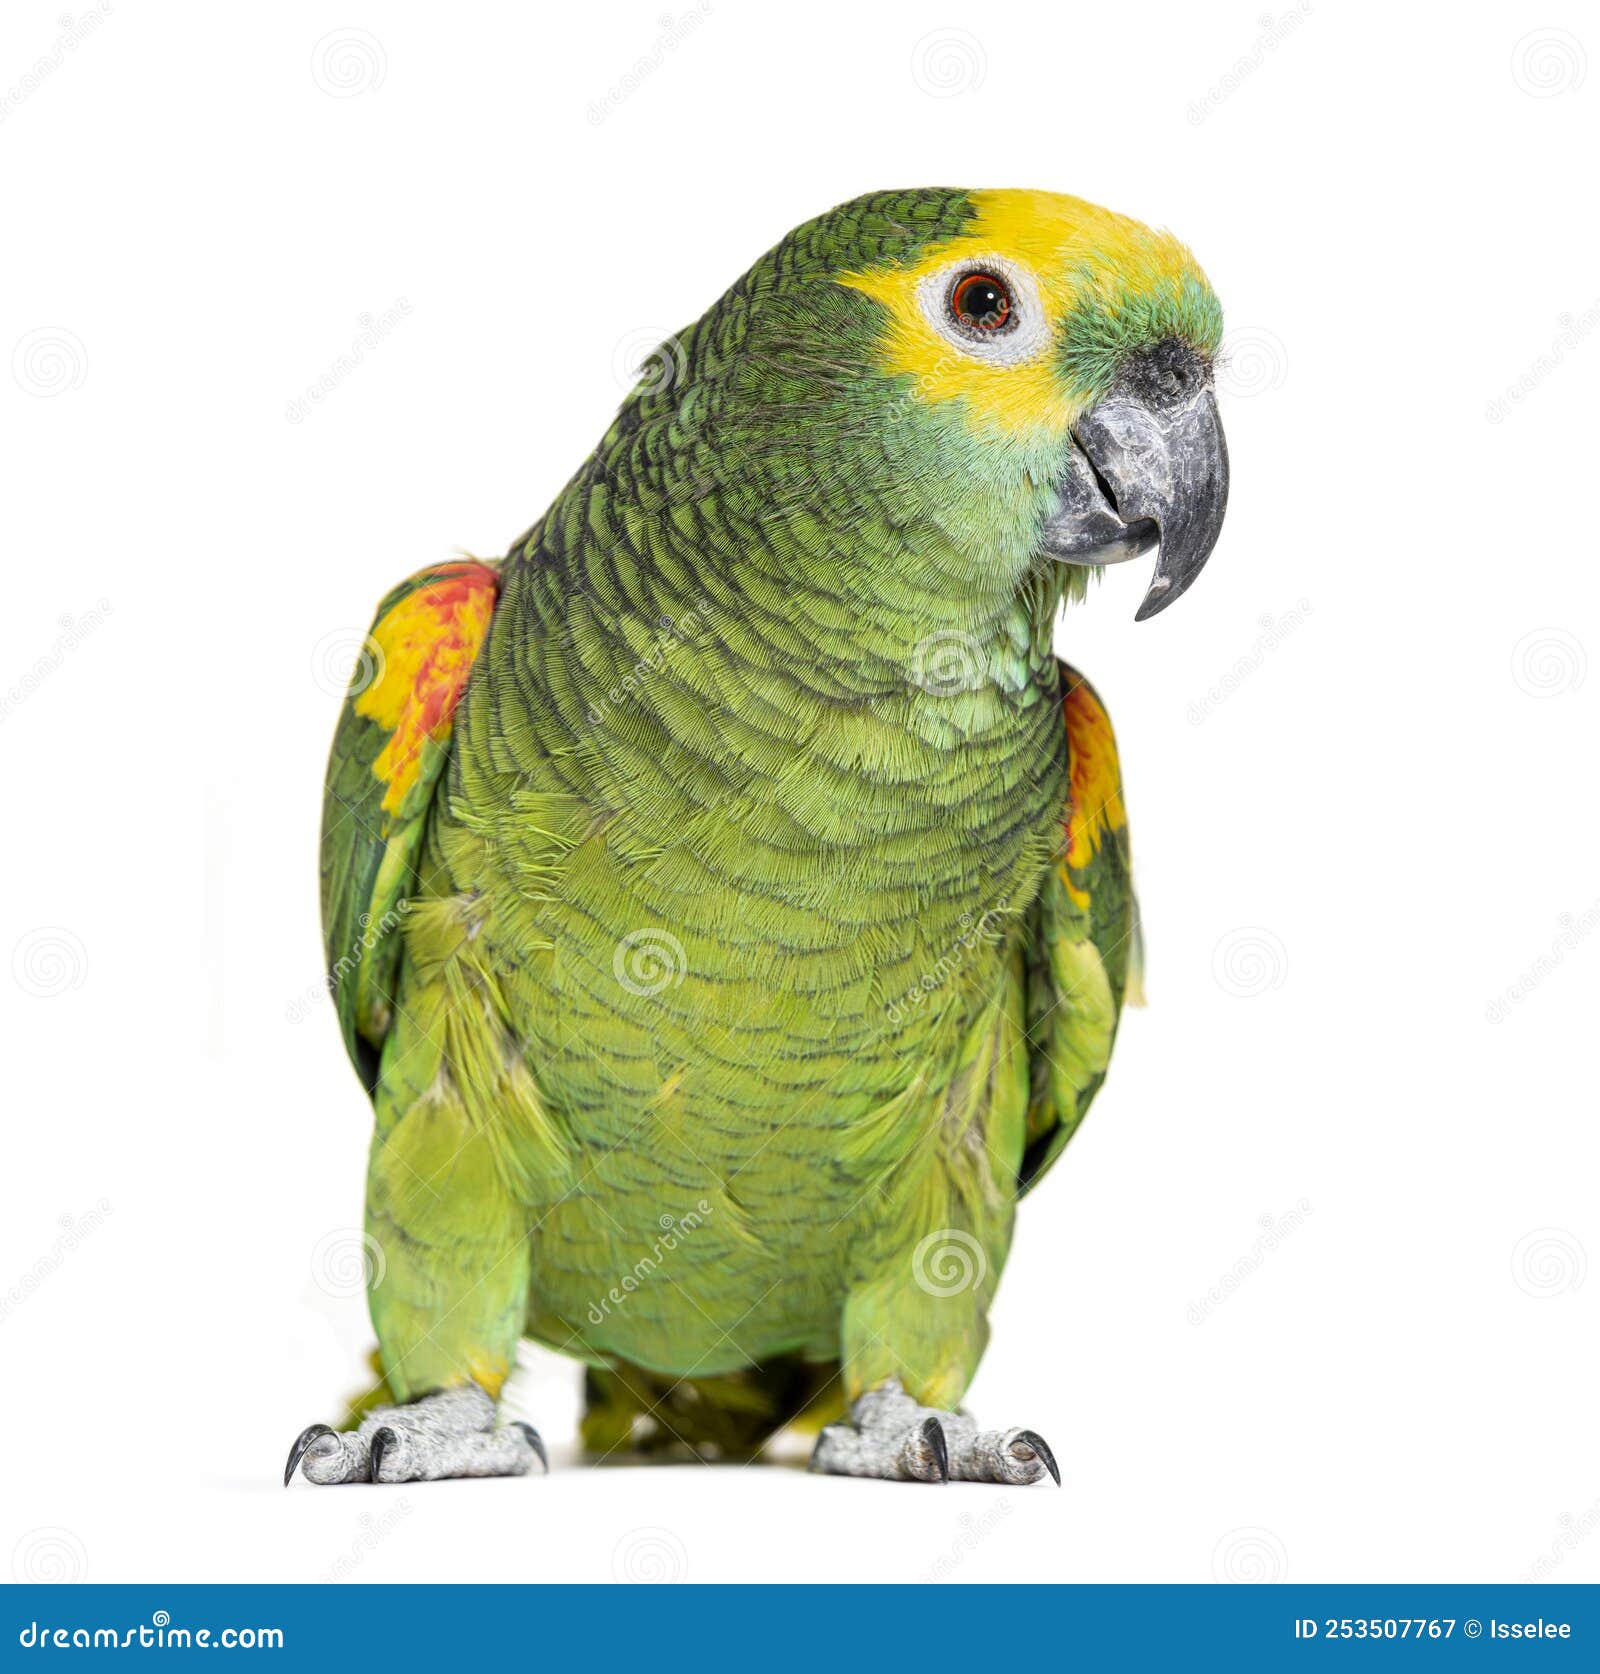 blue-fronted parrot, amazona aestiva,  on white